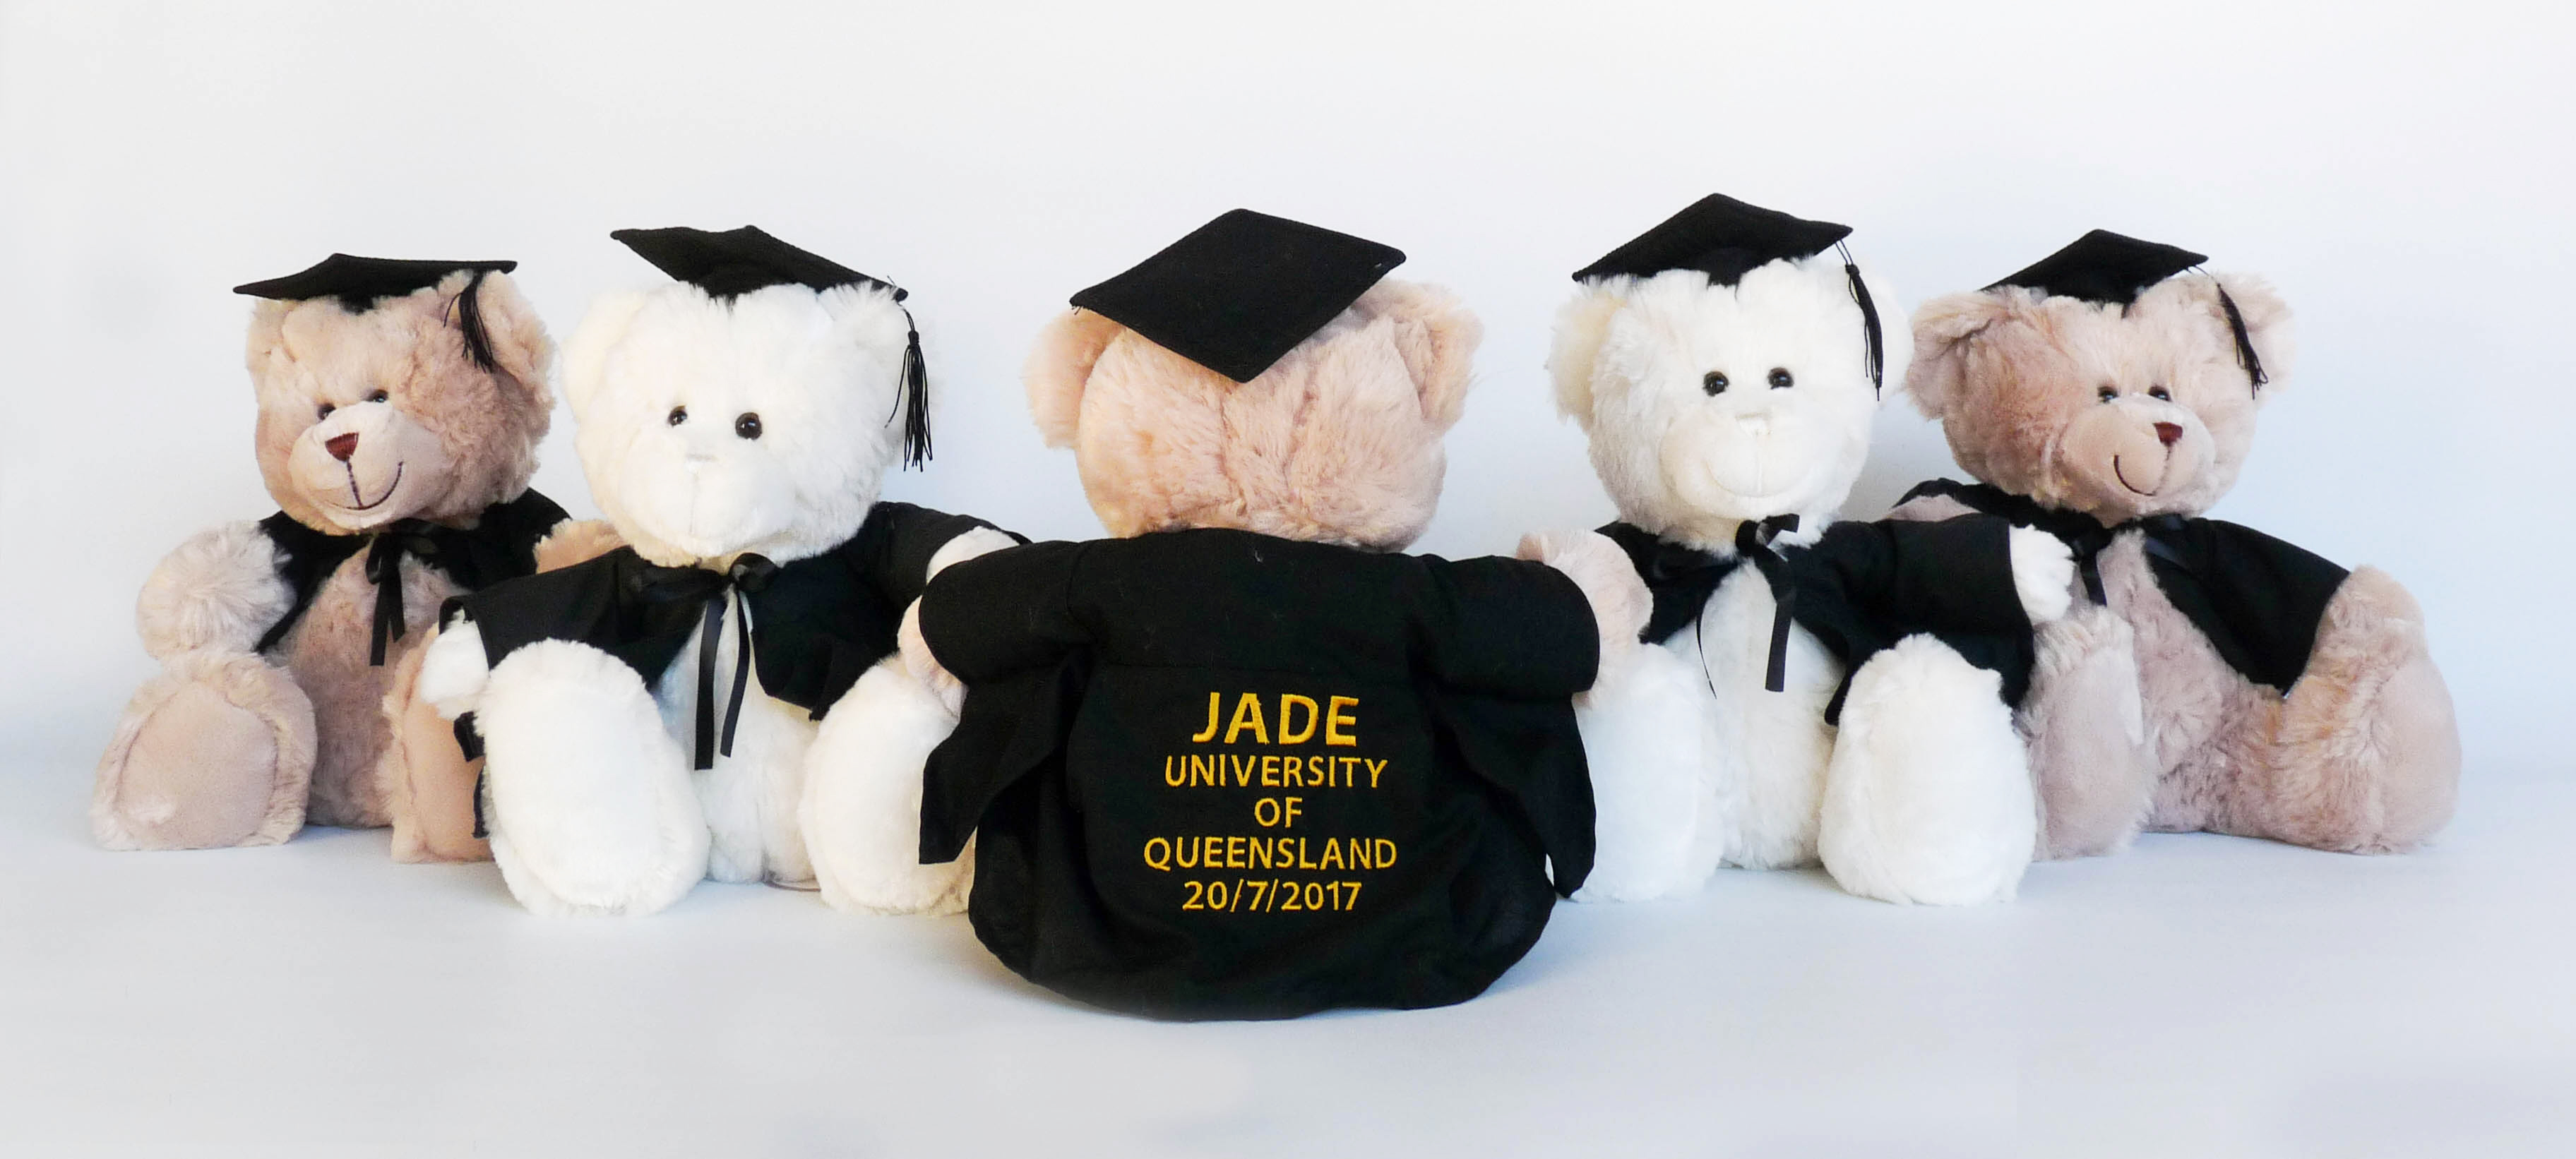 personalized graduation bear